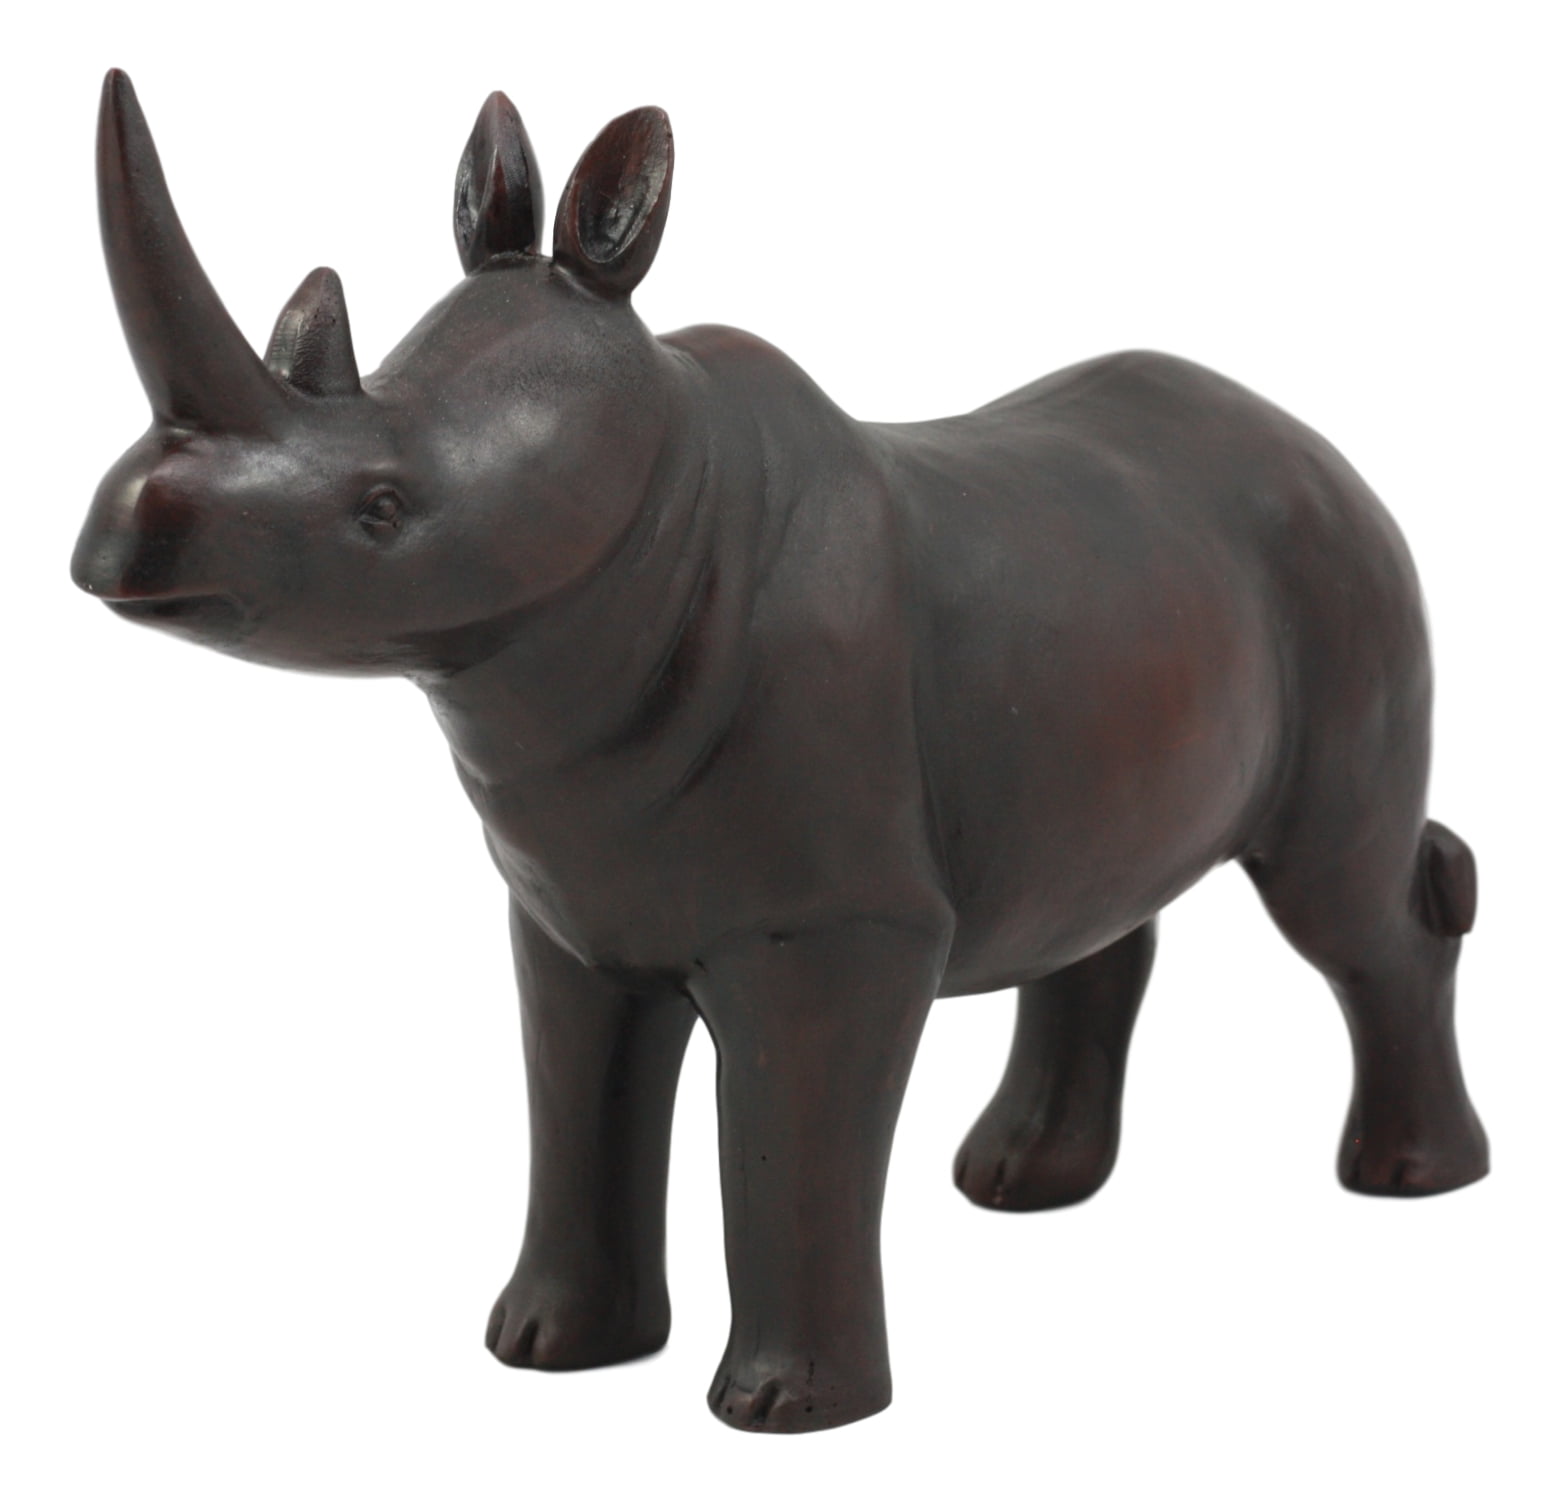 Rhinoceros Figurine Sculpture Statue 13" African Safari Home Living Room Decor 